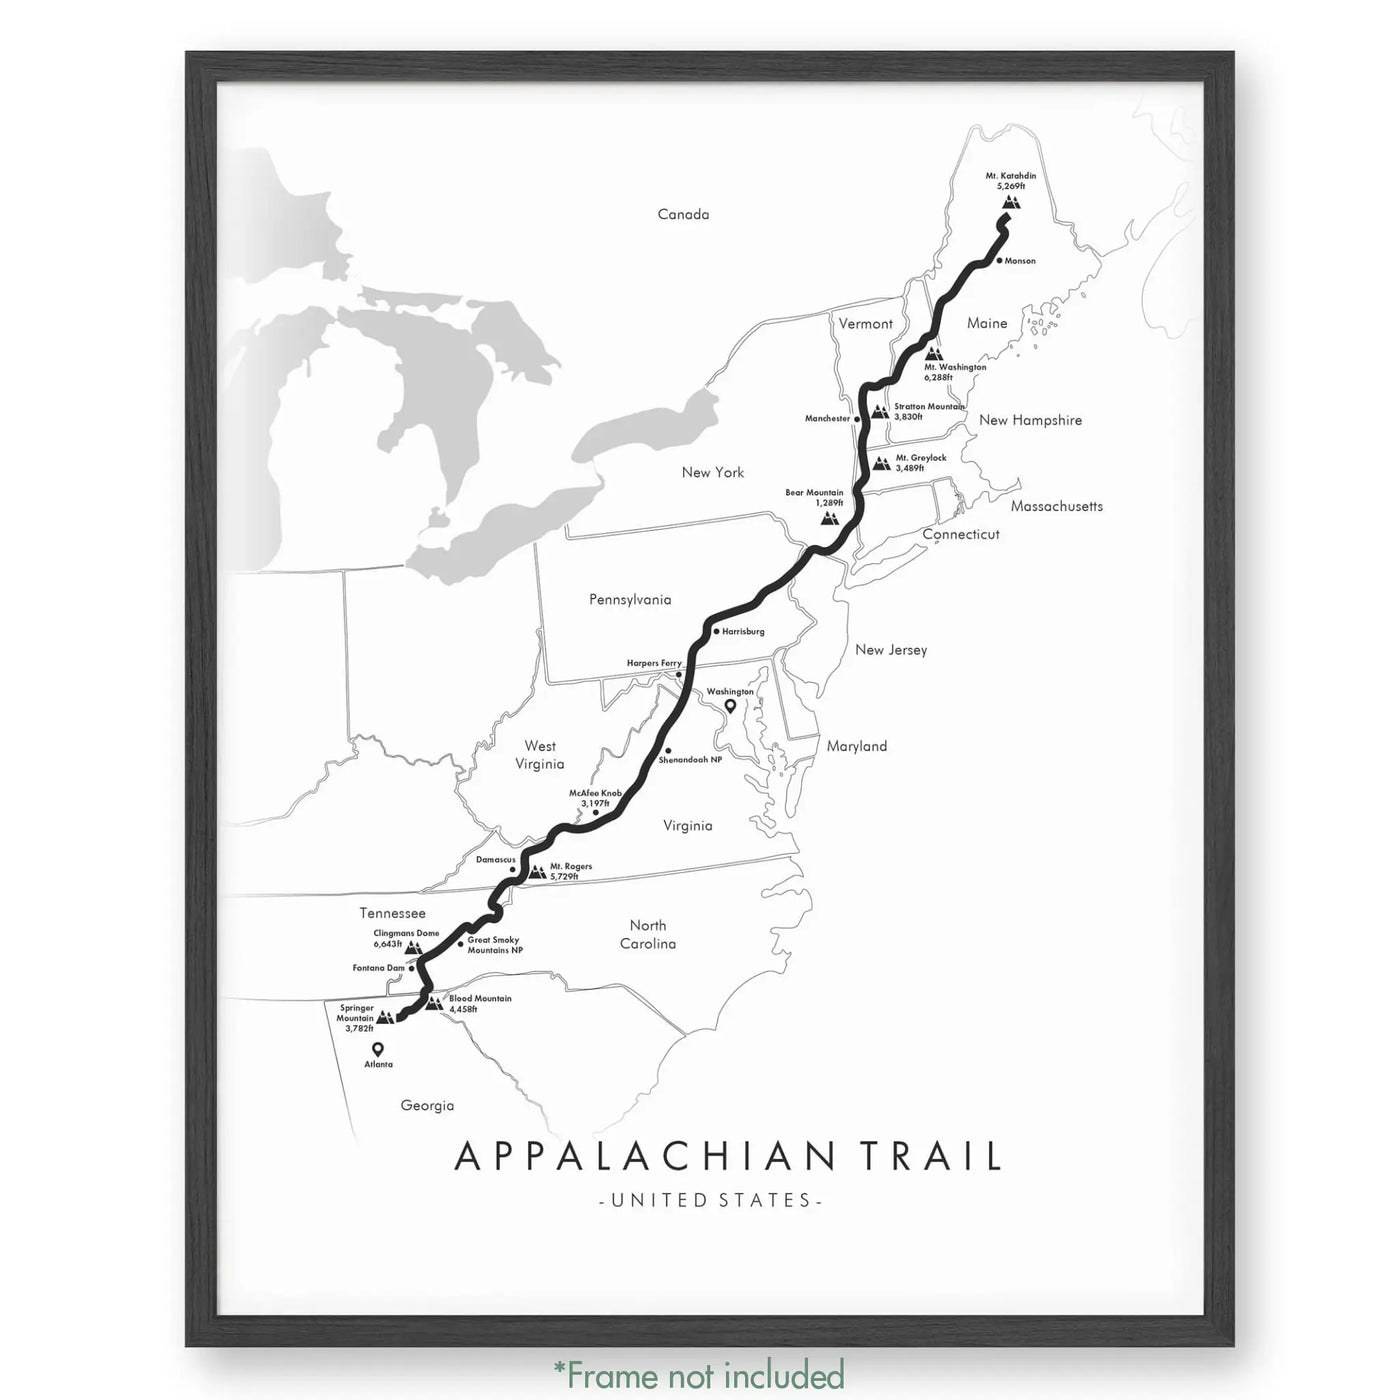 Trail Poster of Appalachian Trail - White